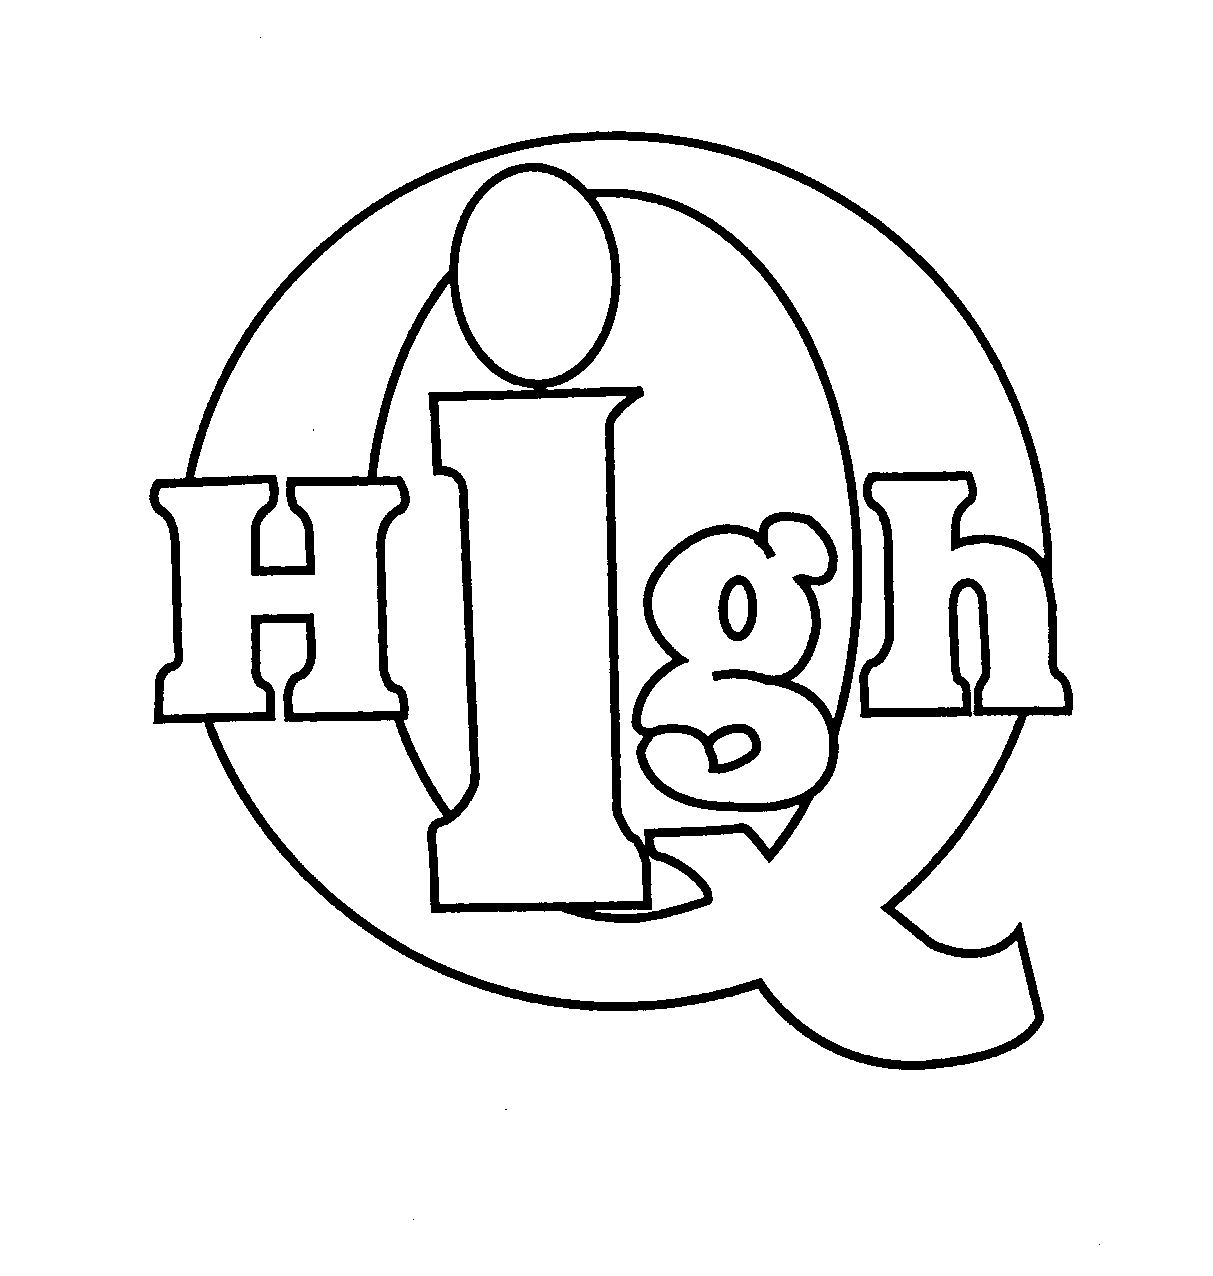 Trademark Logo HIGH Q